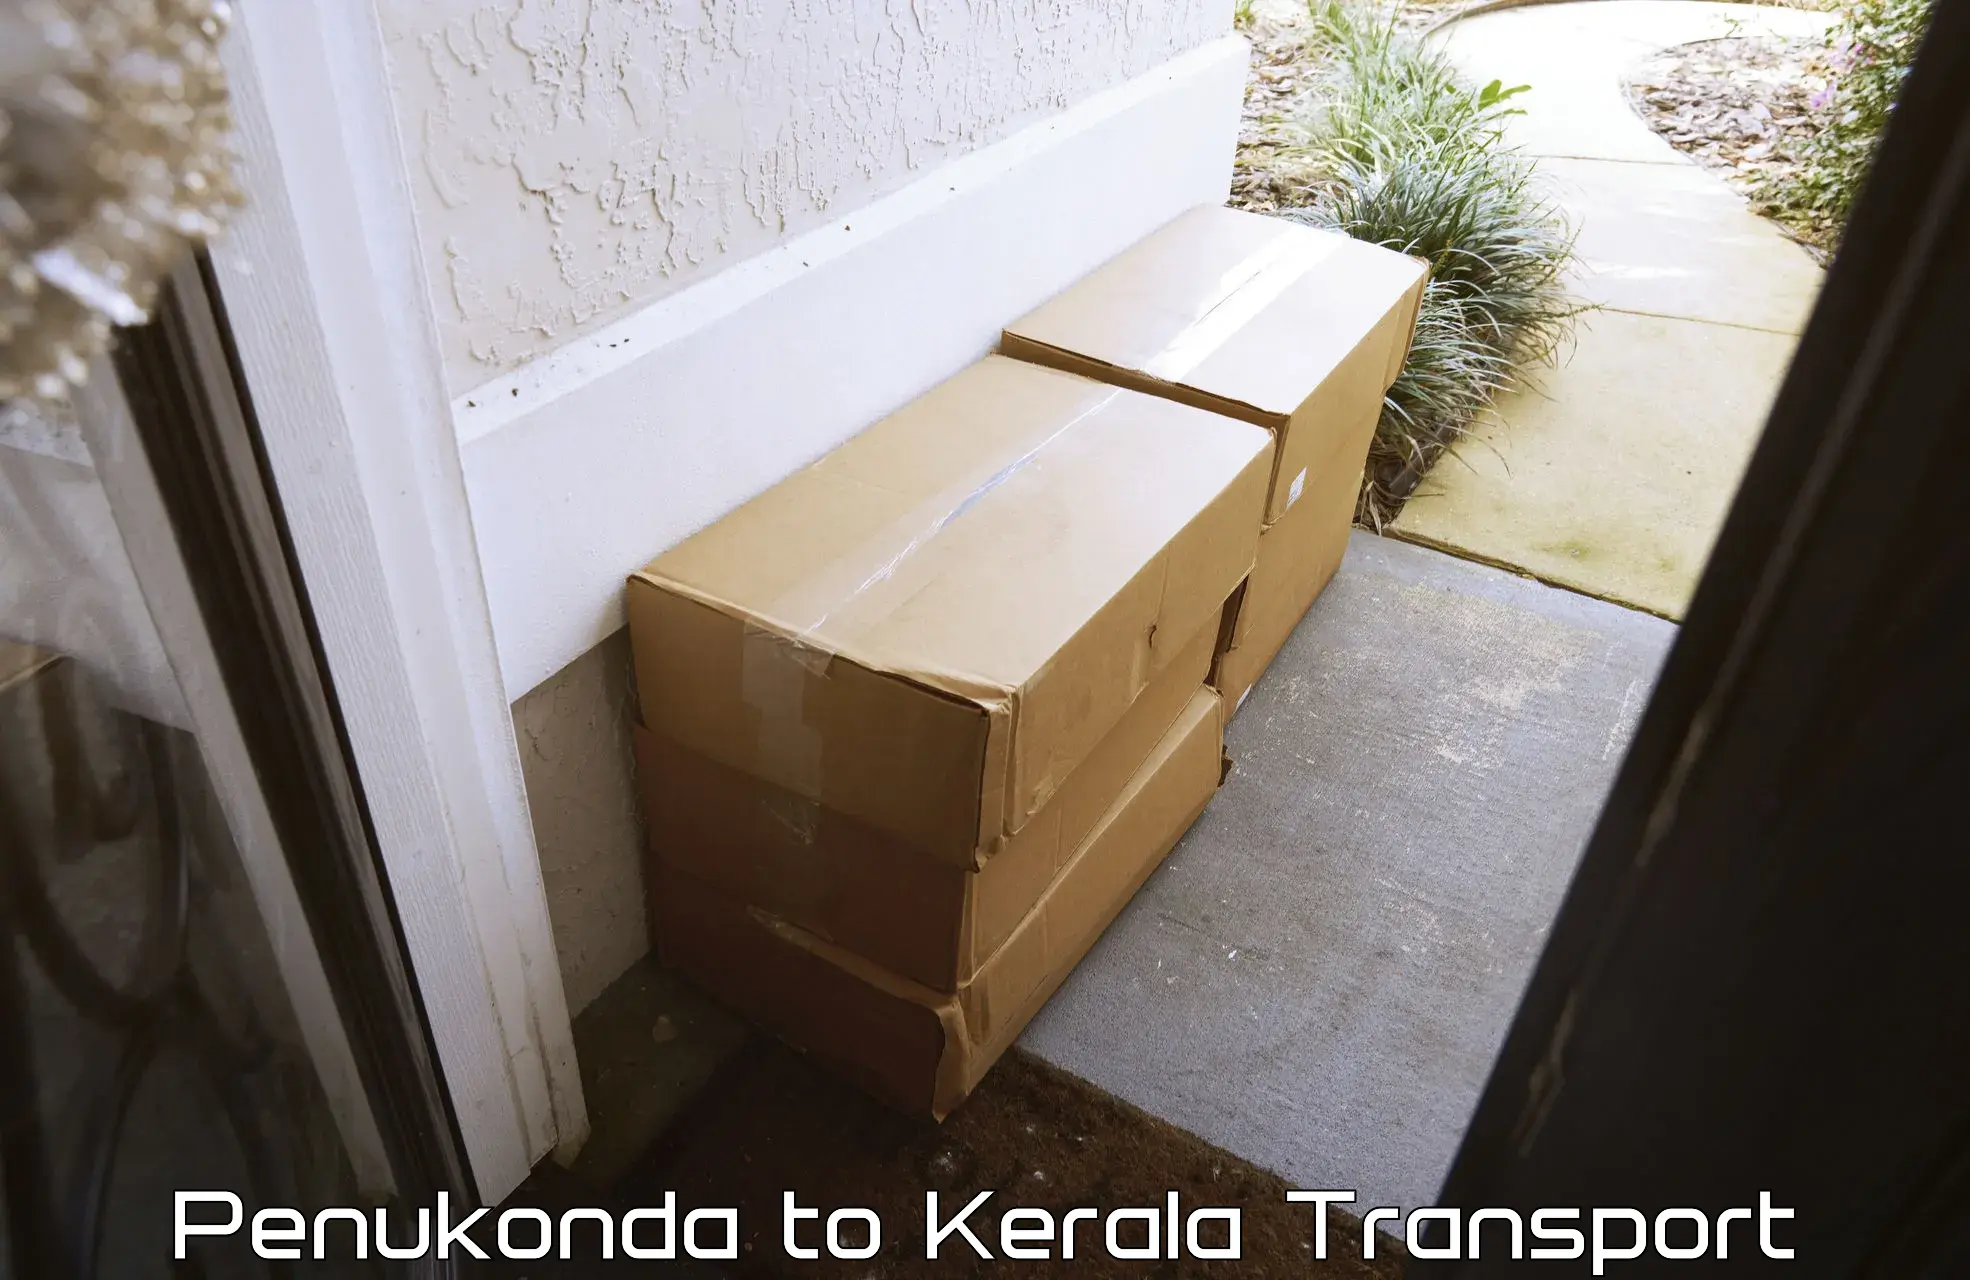 Online transport service Penukonda to Kerala